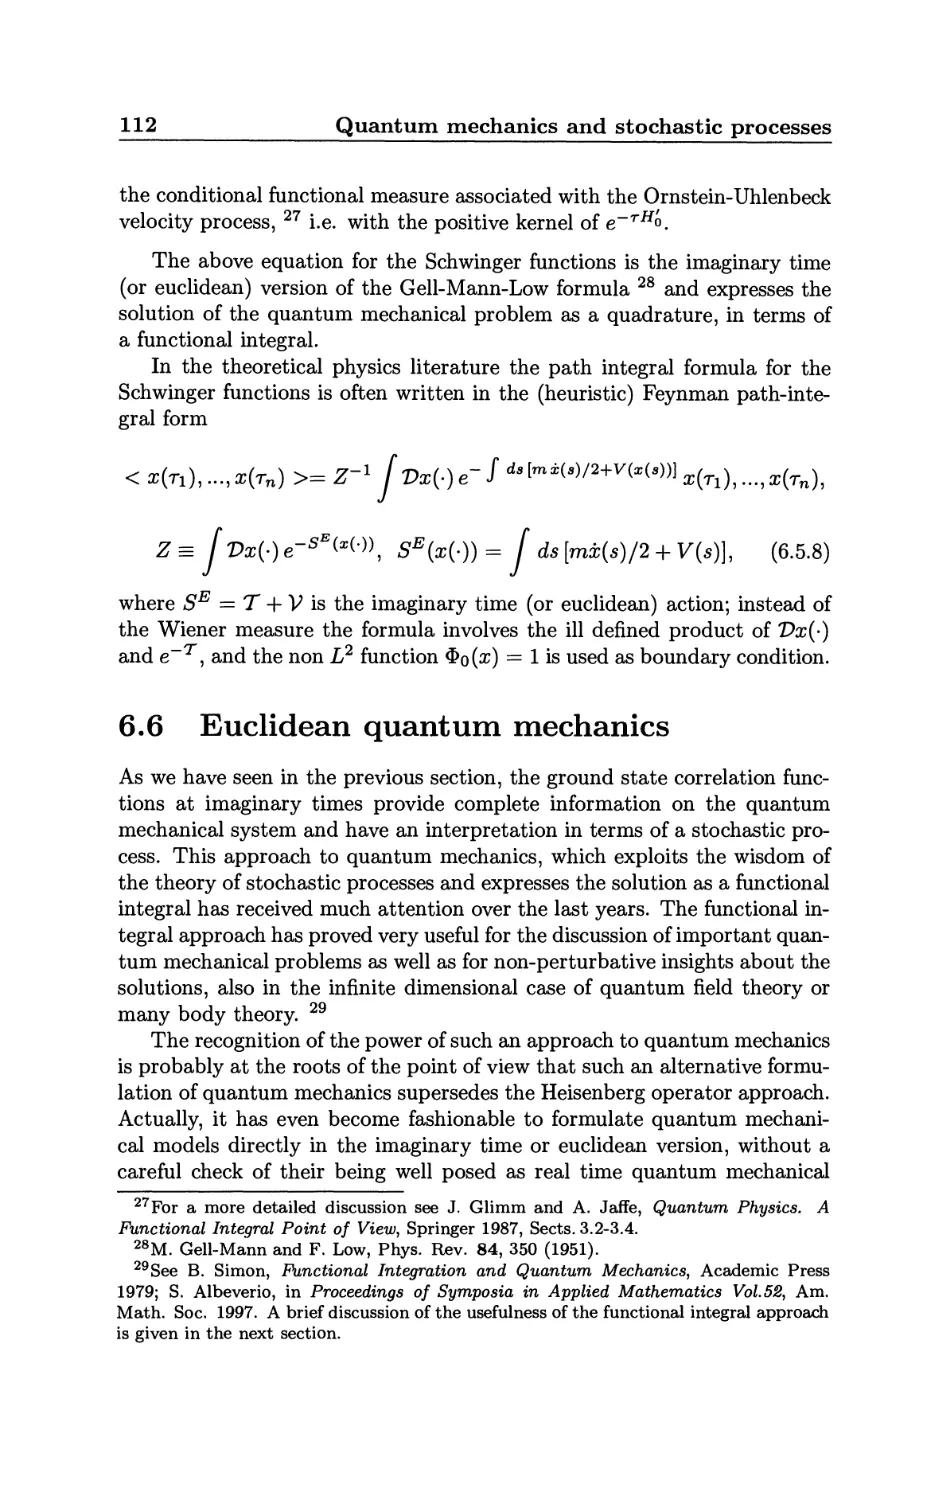 6.6 Euclidean quantum mechanics